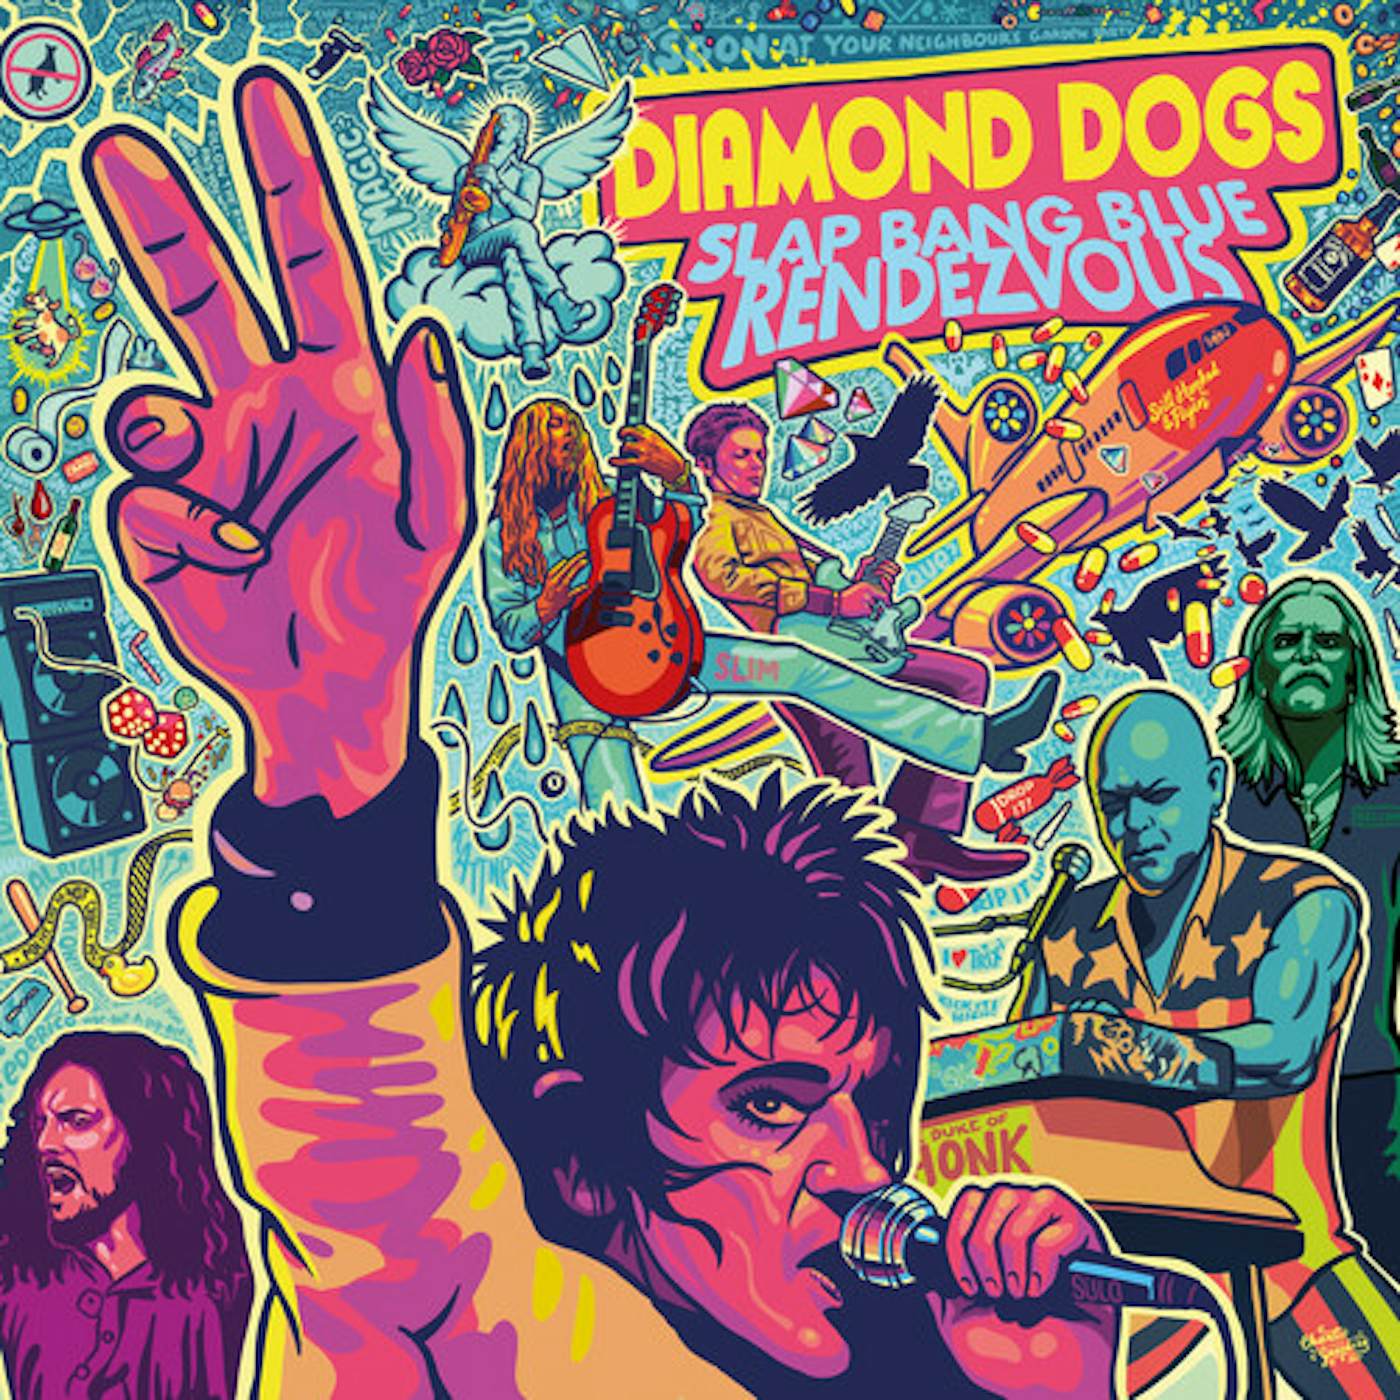 Diamond Dogs SLAP BANG BLUE RENDEZVOUS CD